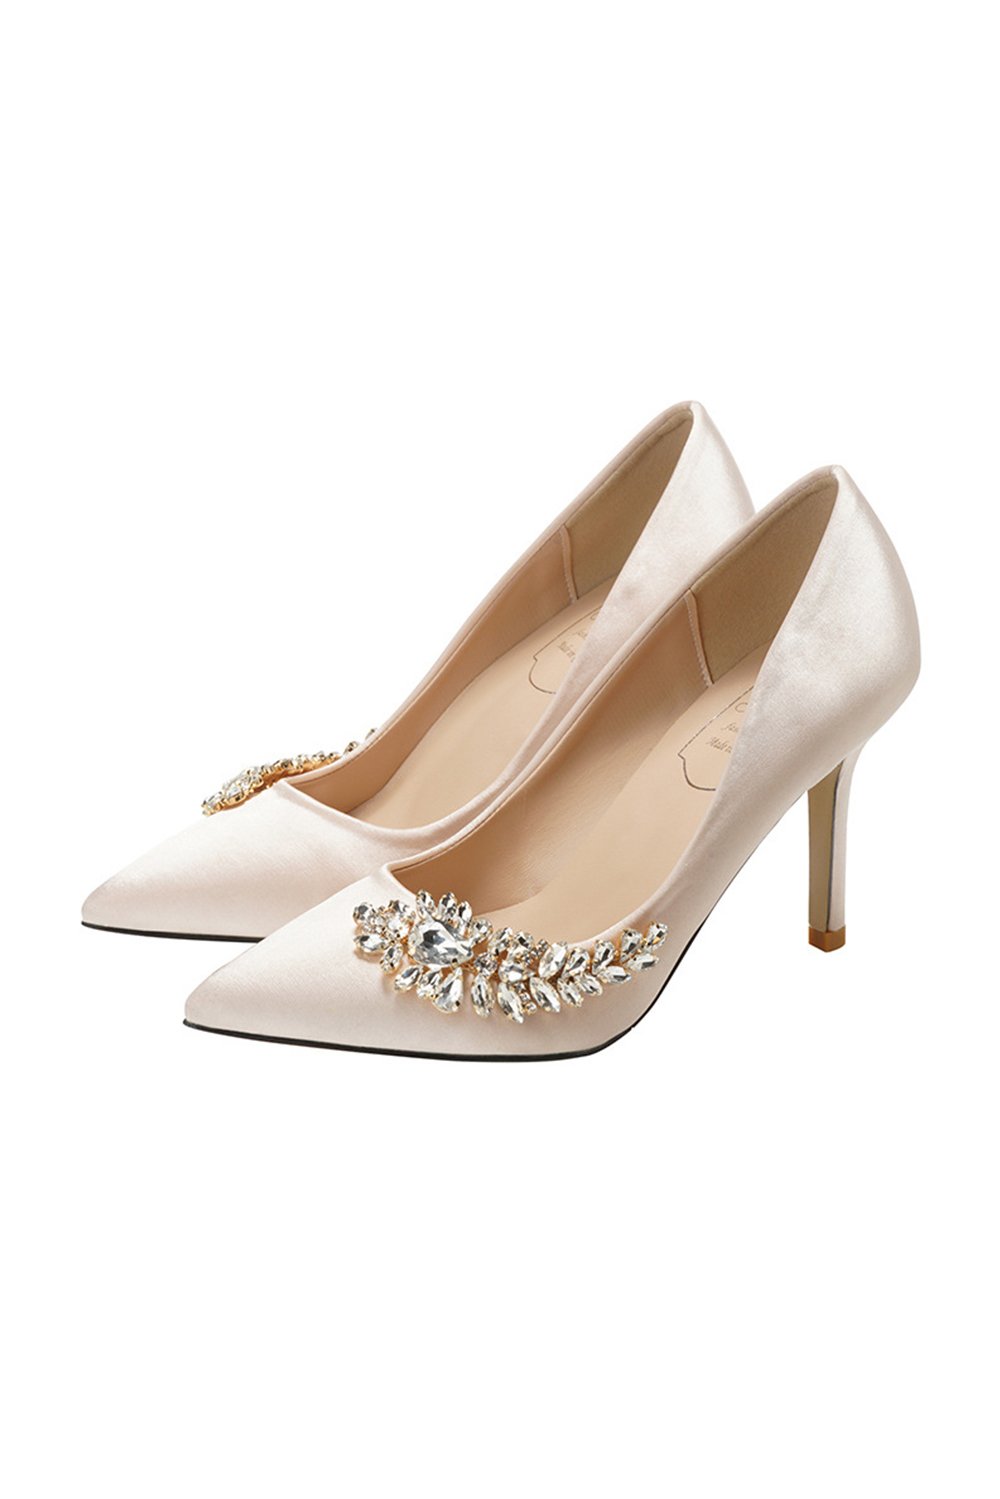 Stiletto Heel 9cm Satin Heels Bridal Shoes CK0129